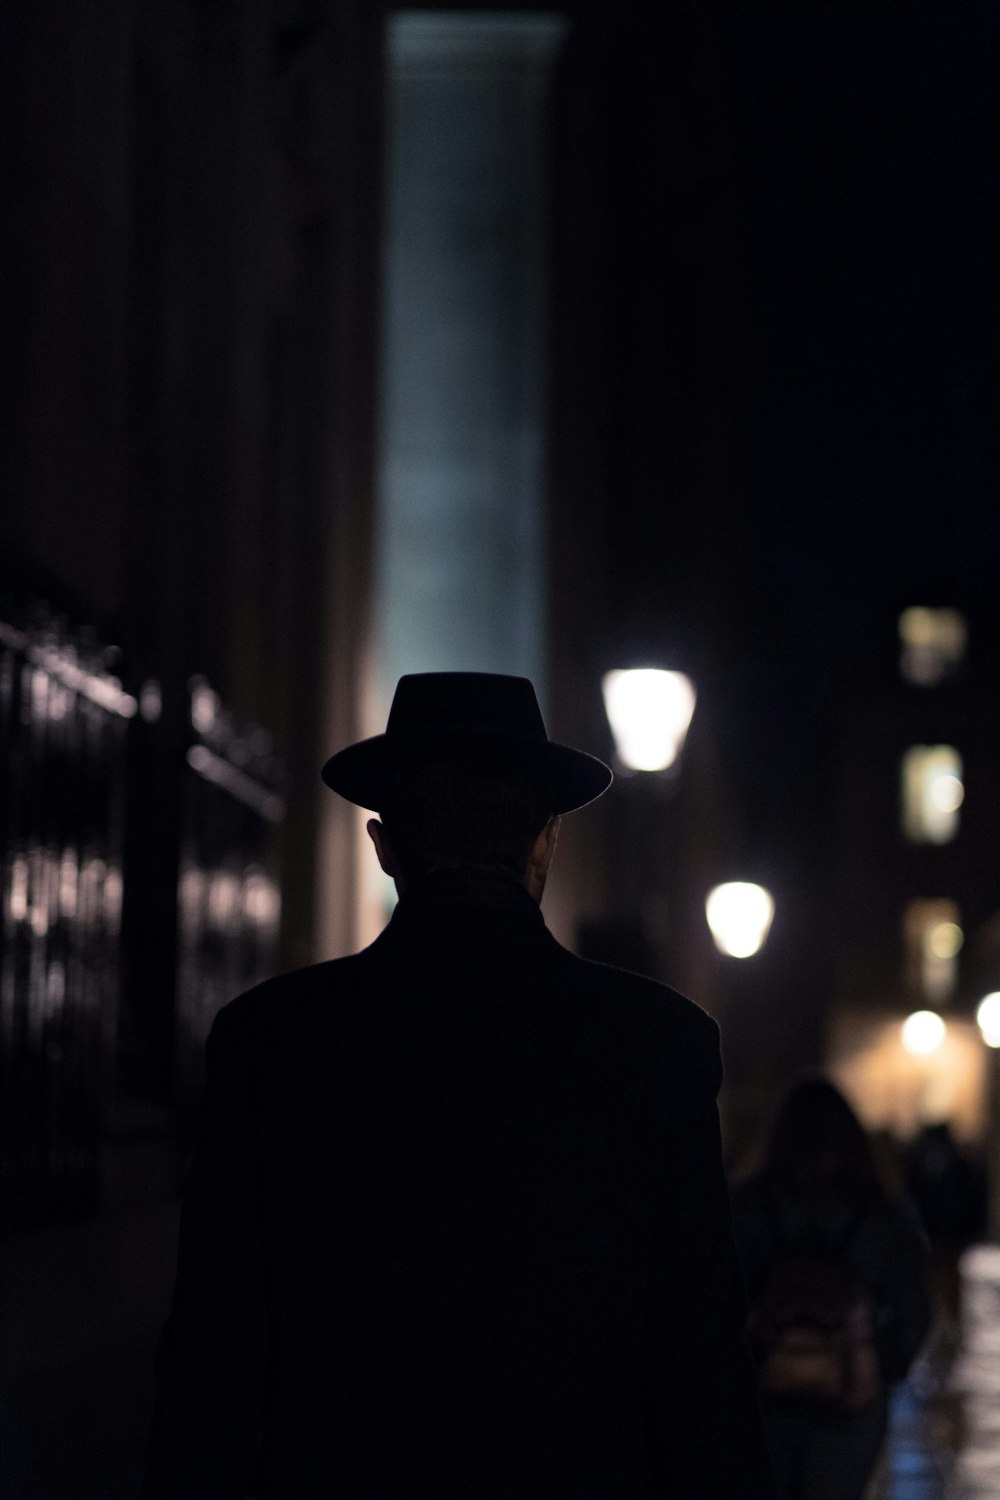 Asombro Pronombre Venta ambulante Man in black hat walking on sidewalk during night time photo – Free  Cambridge Image on Unsplash